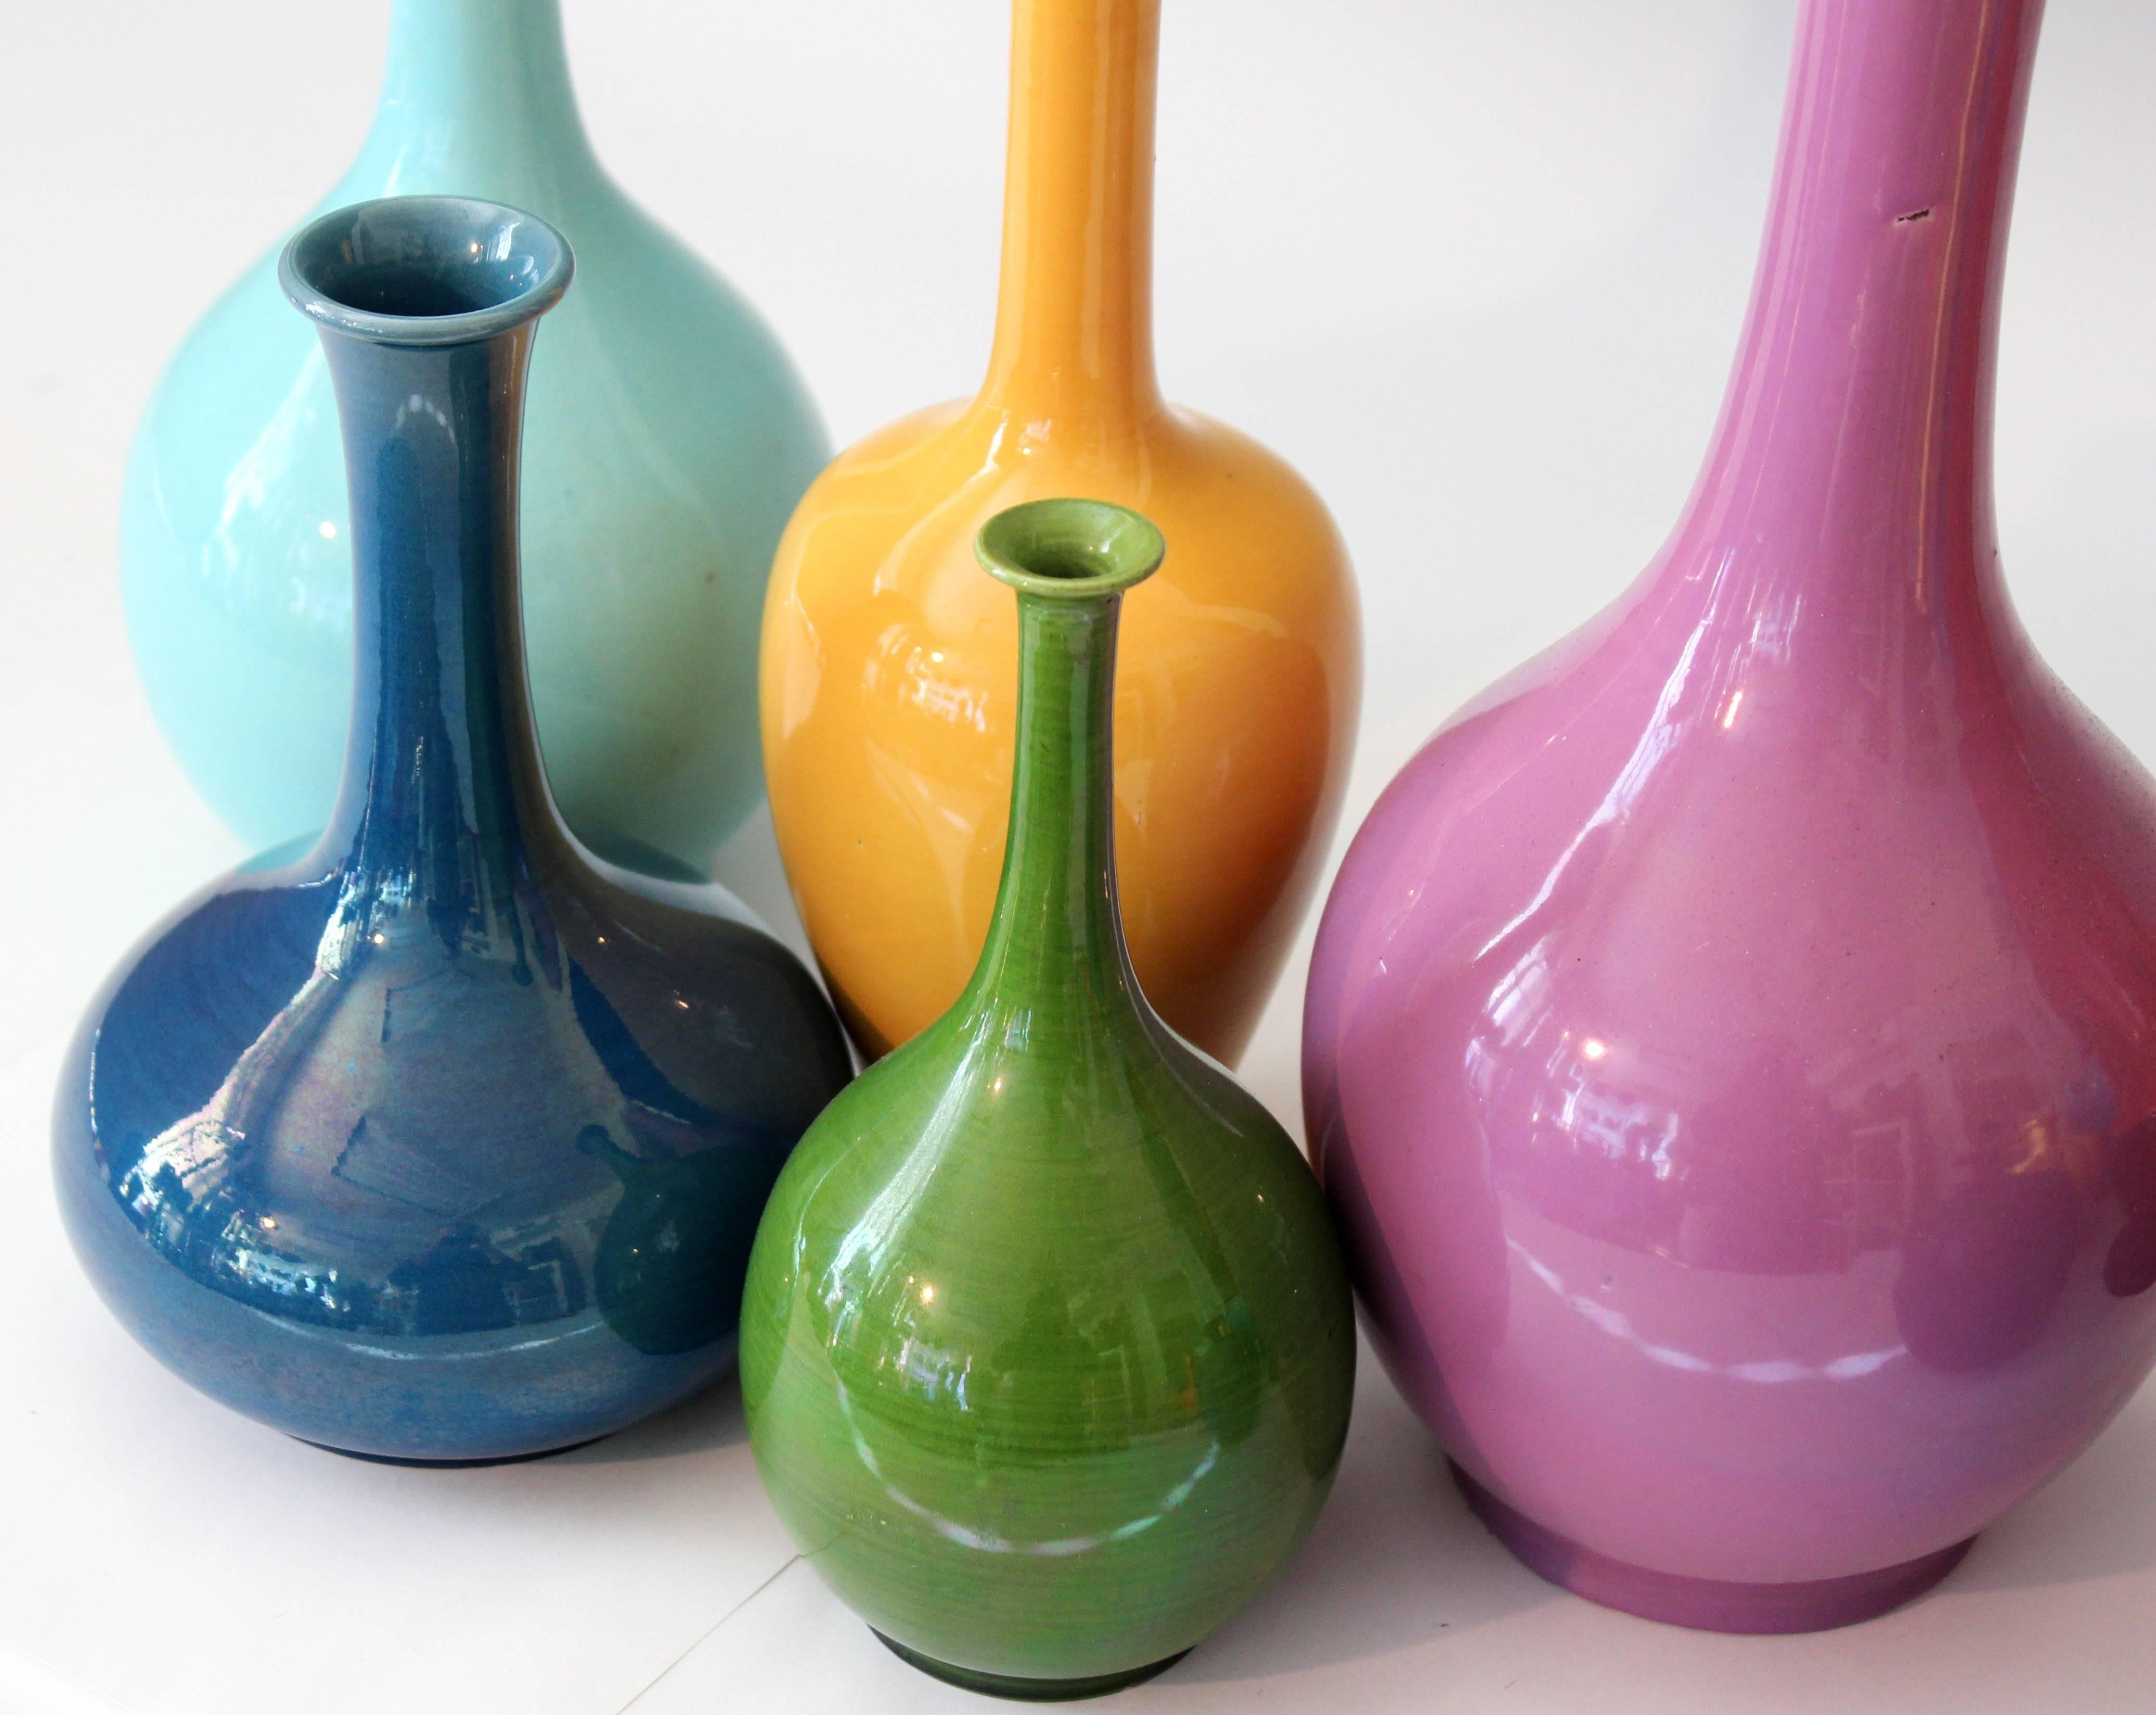 Five Awaji bottle vases in different colored monochrome glazes, circa 1910-1930. Measures: 6